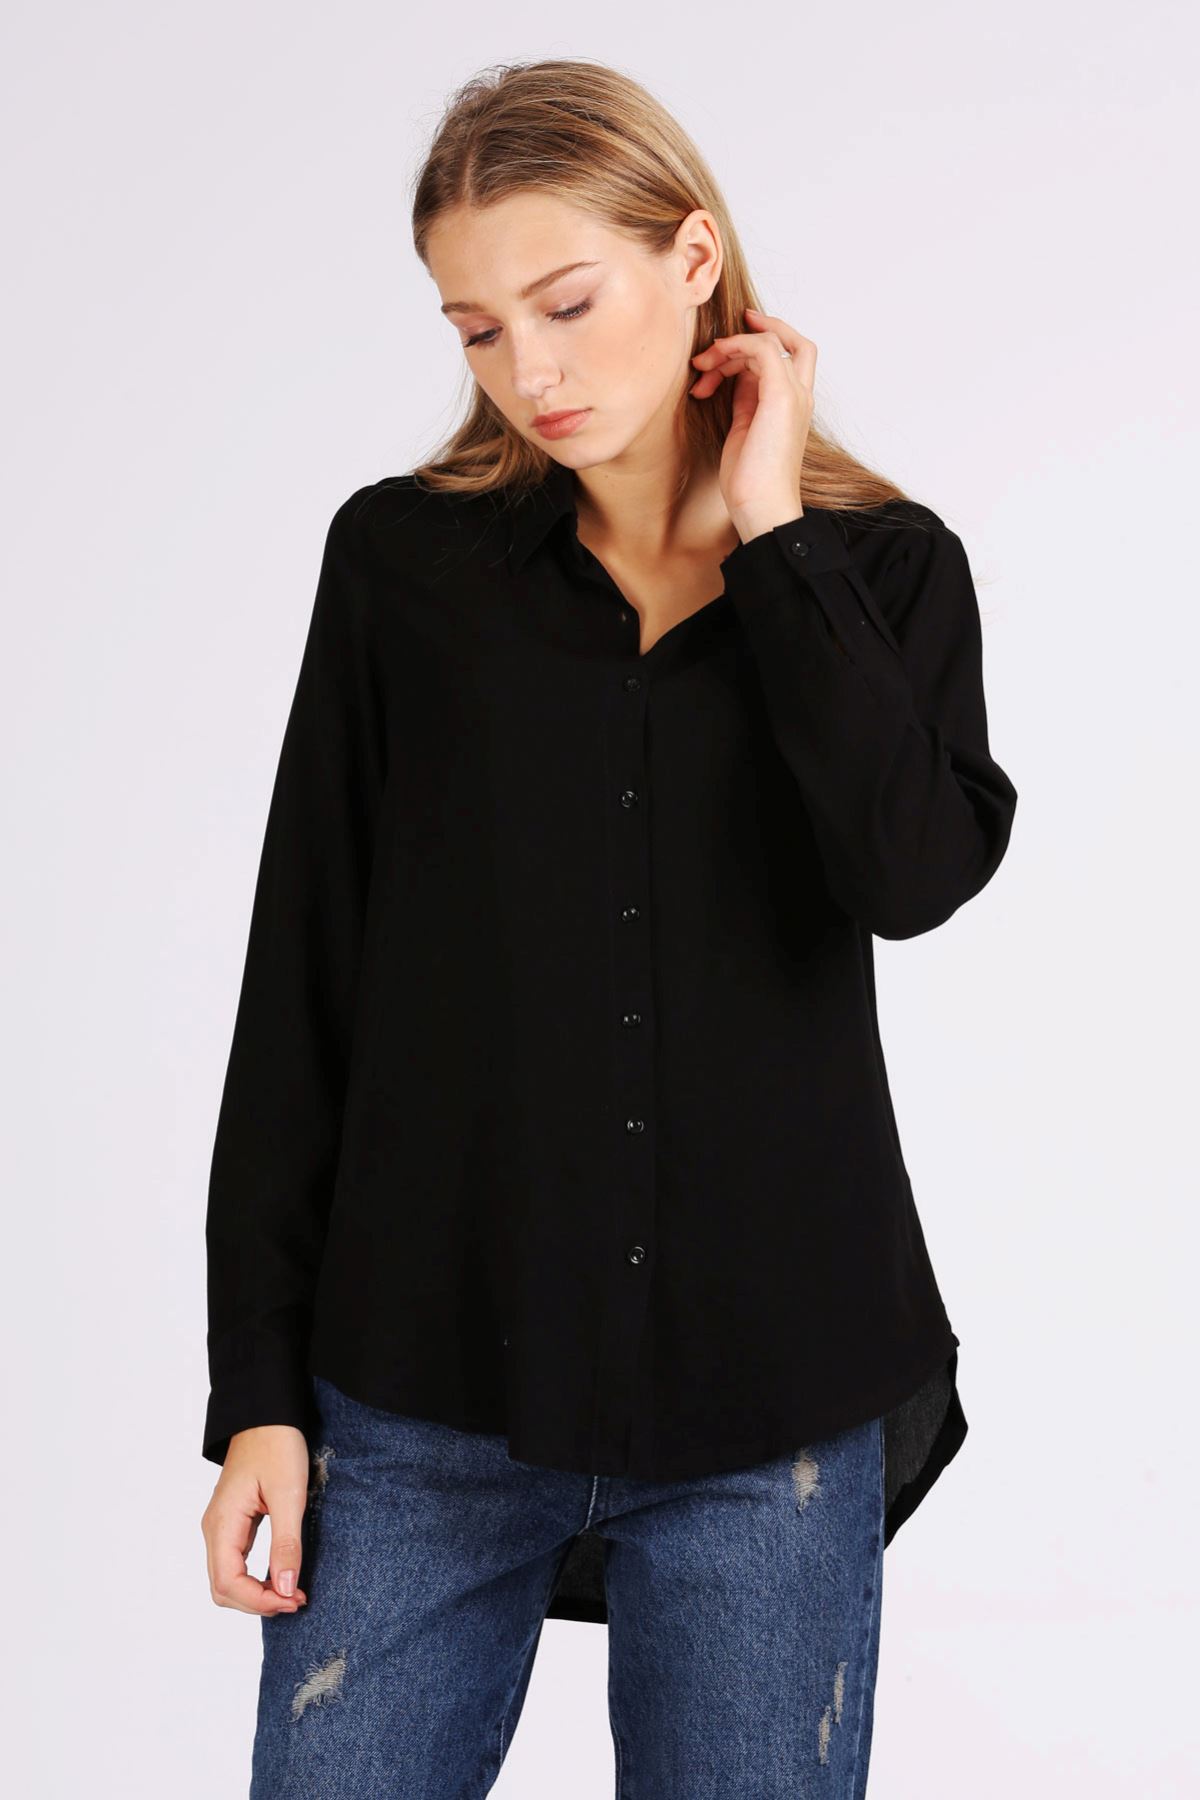 Giyinsen Kadın Siyah Gömlek - 24YM21000016